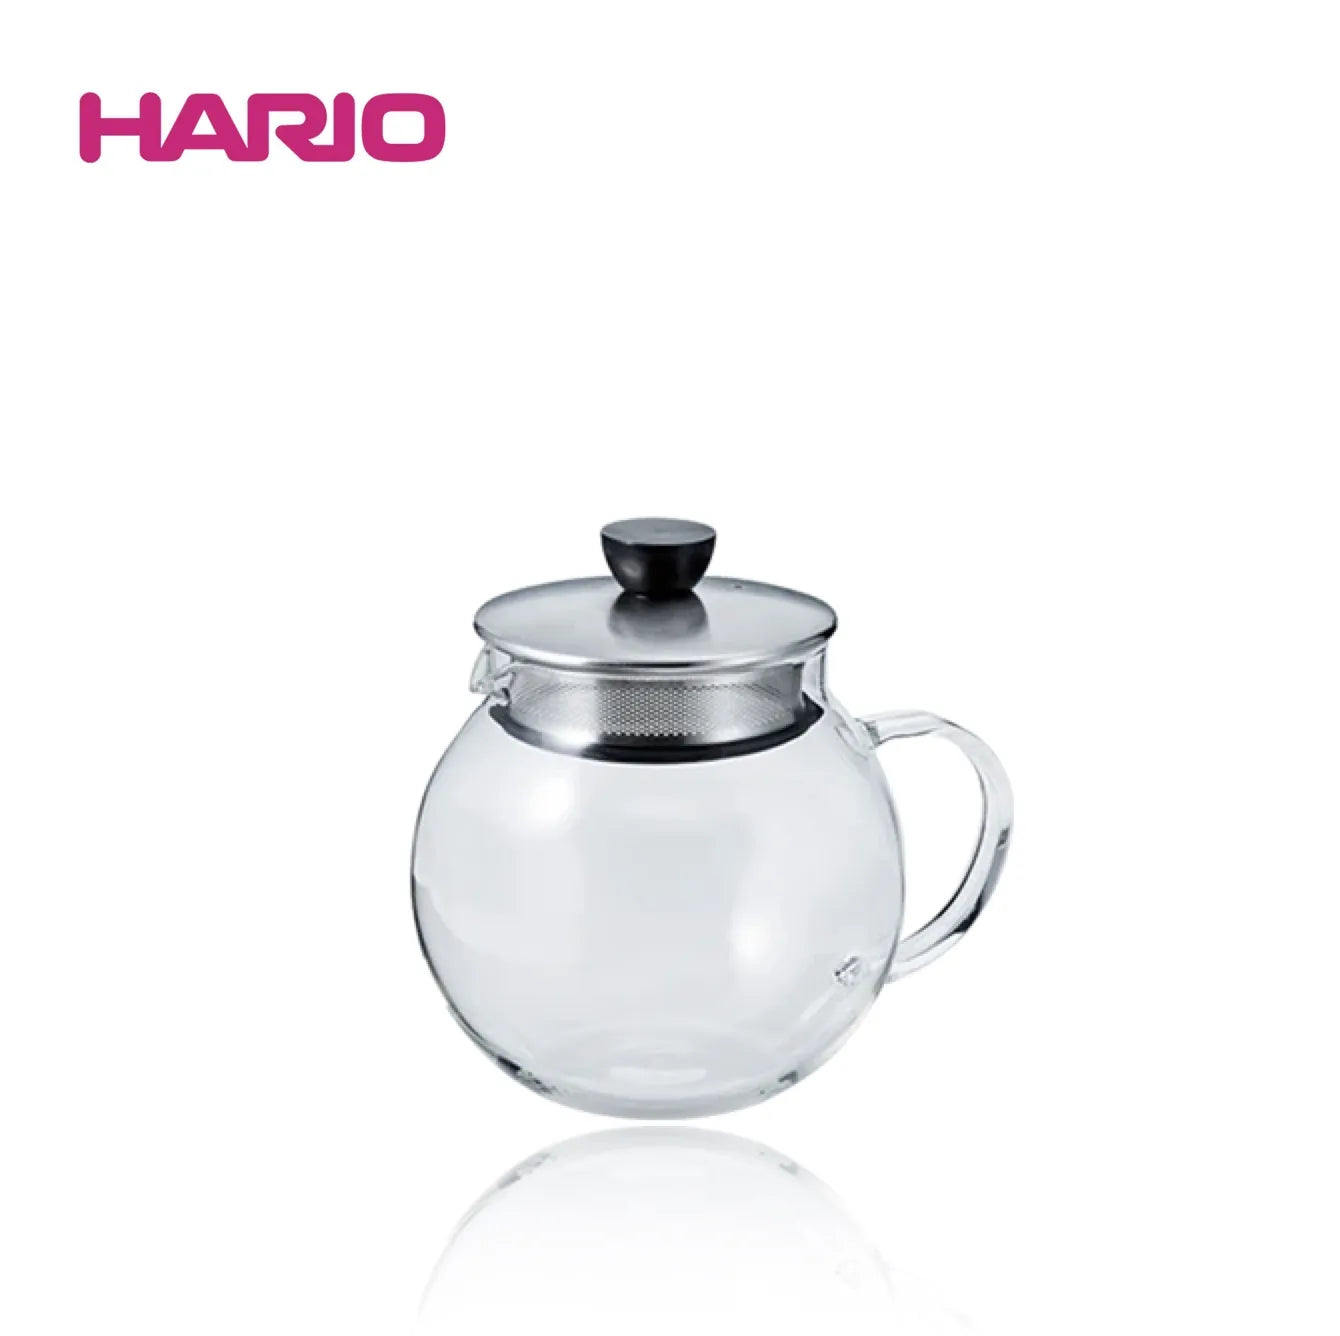 Hario's Tea Making Tools